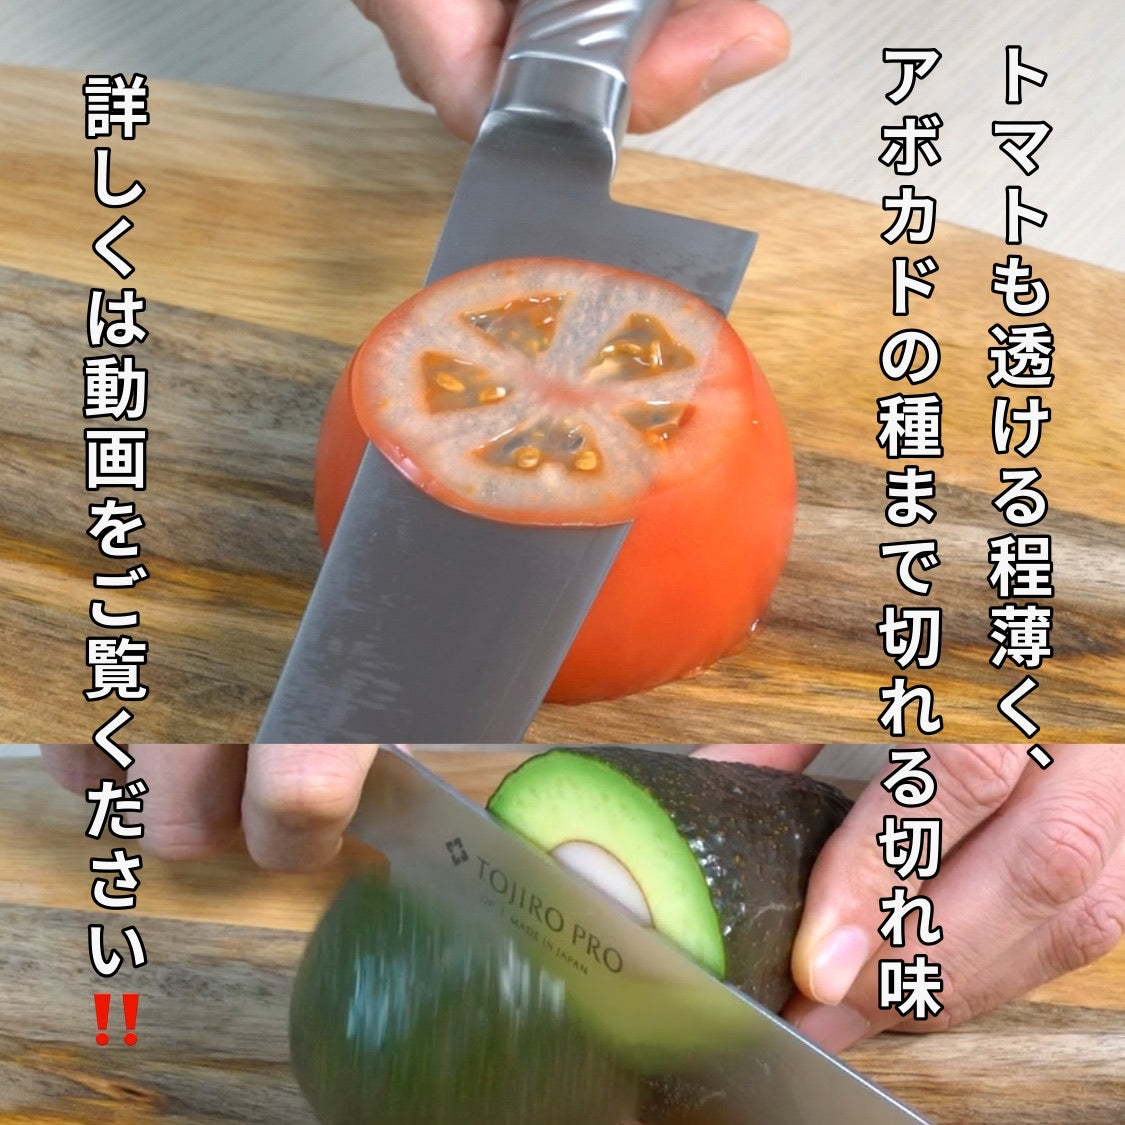 New Kitchen knife Santoku knife 170mm made in Japan Tojiro stainless steel Japan